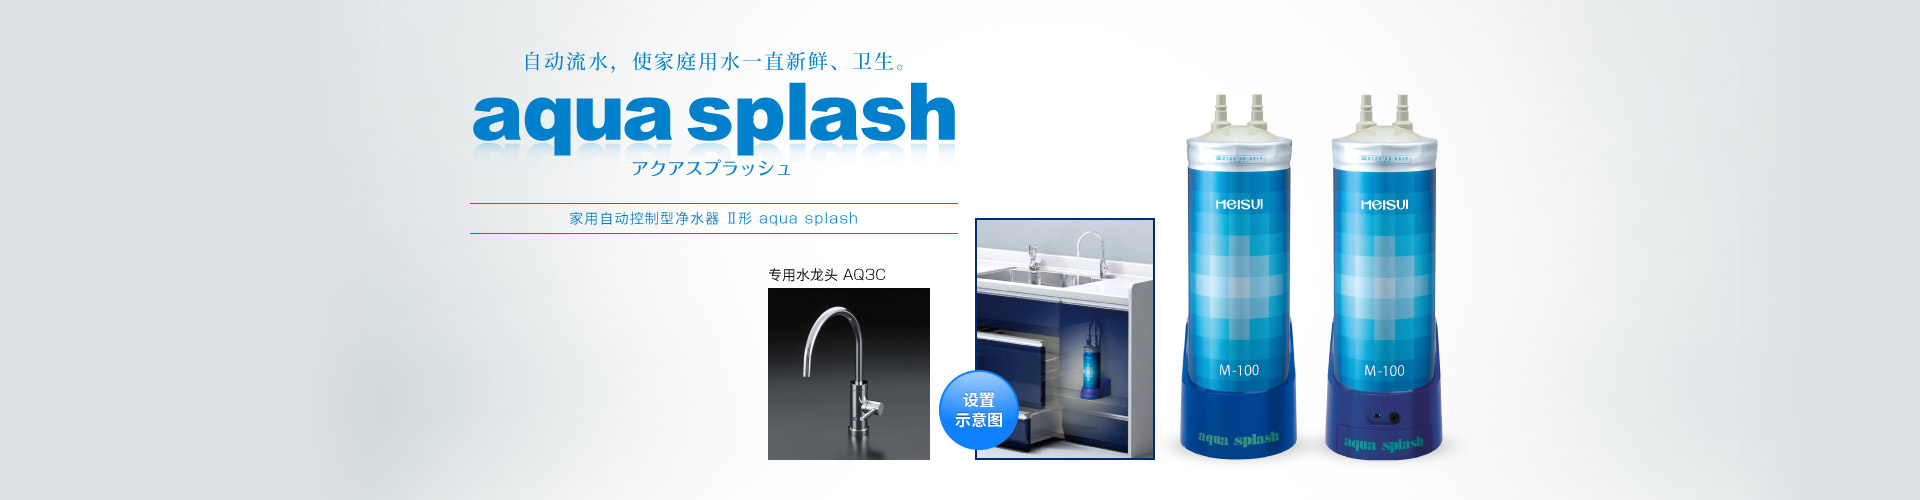 aqua splash 内置型净水器Ⅱ形 自动控制型